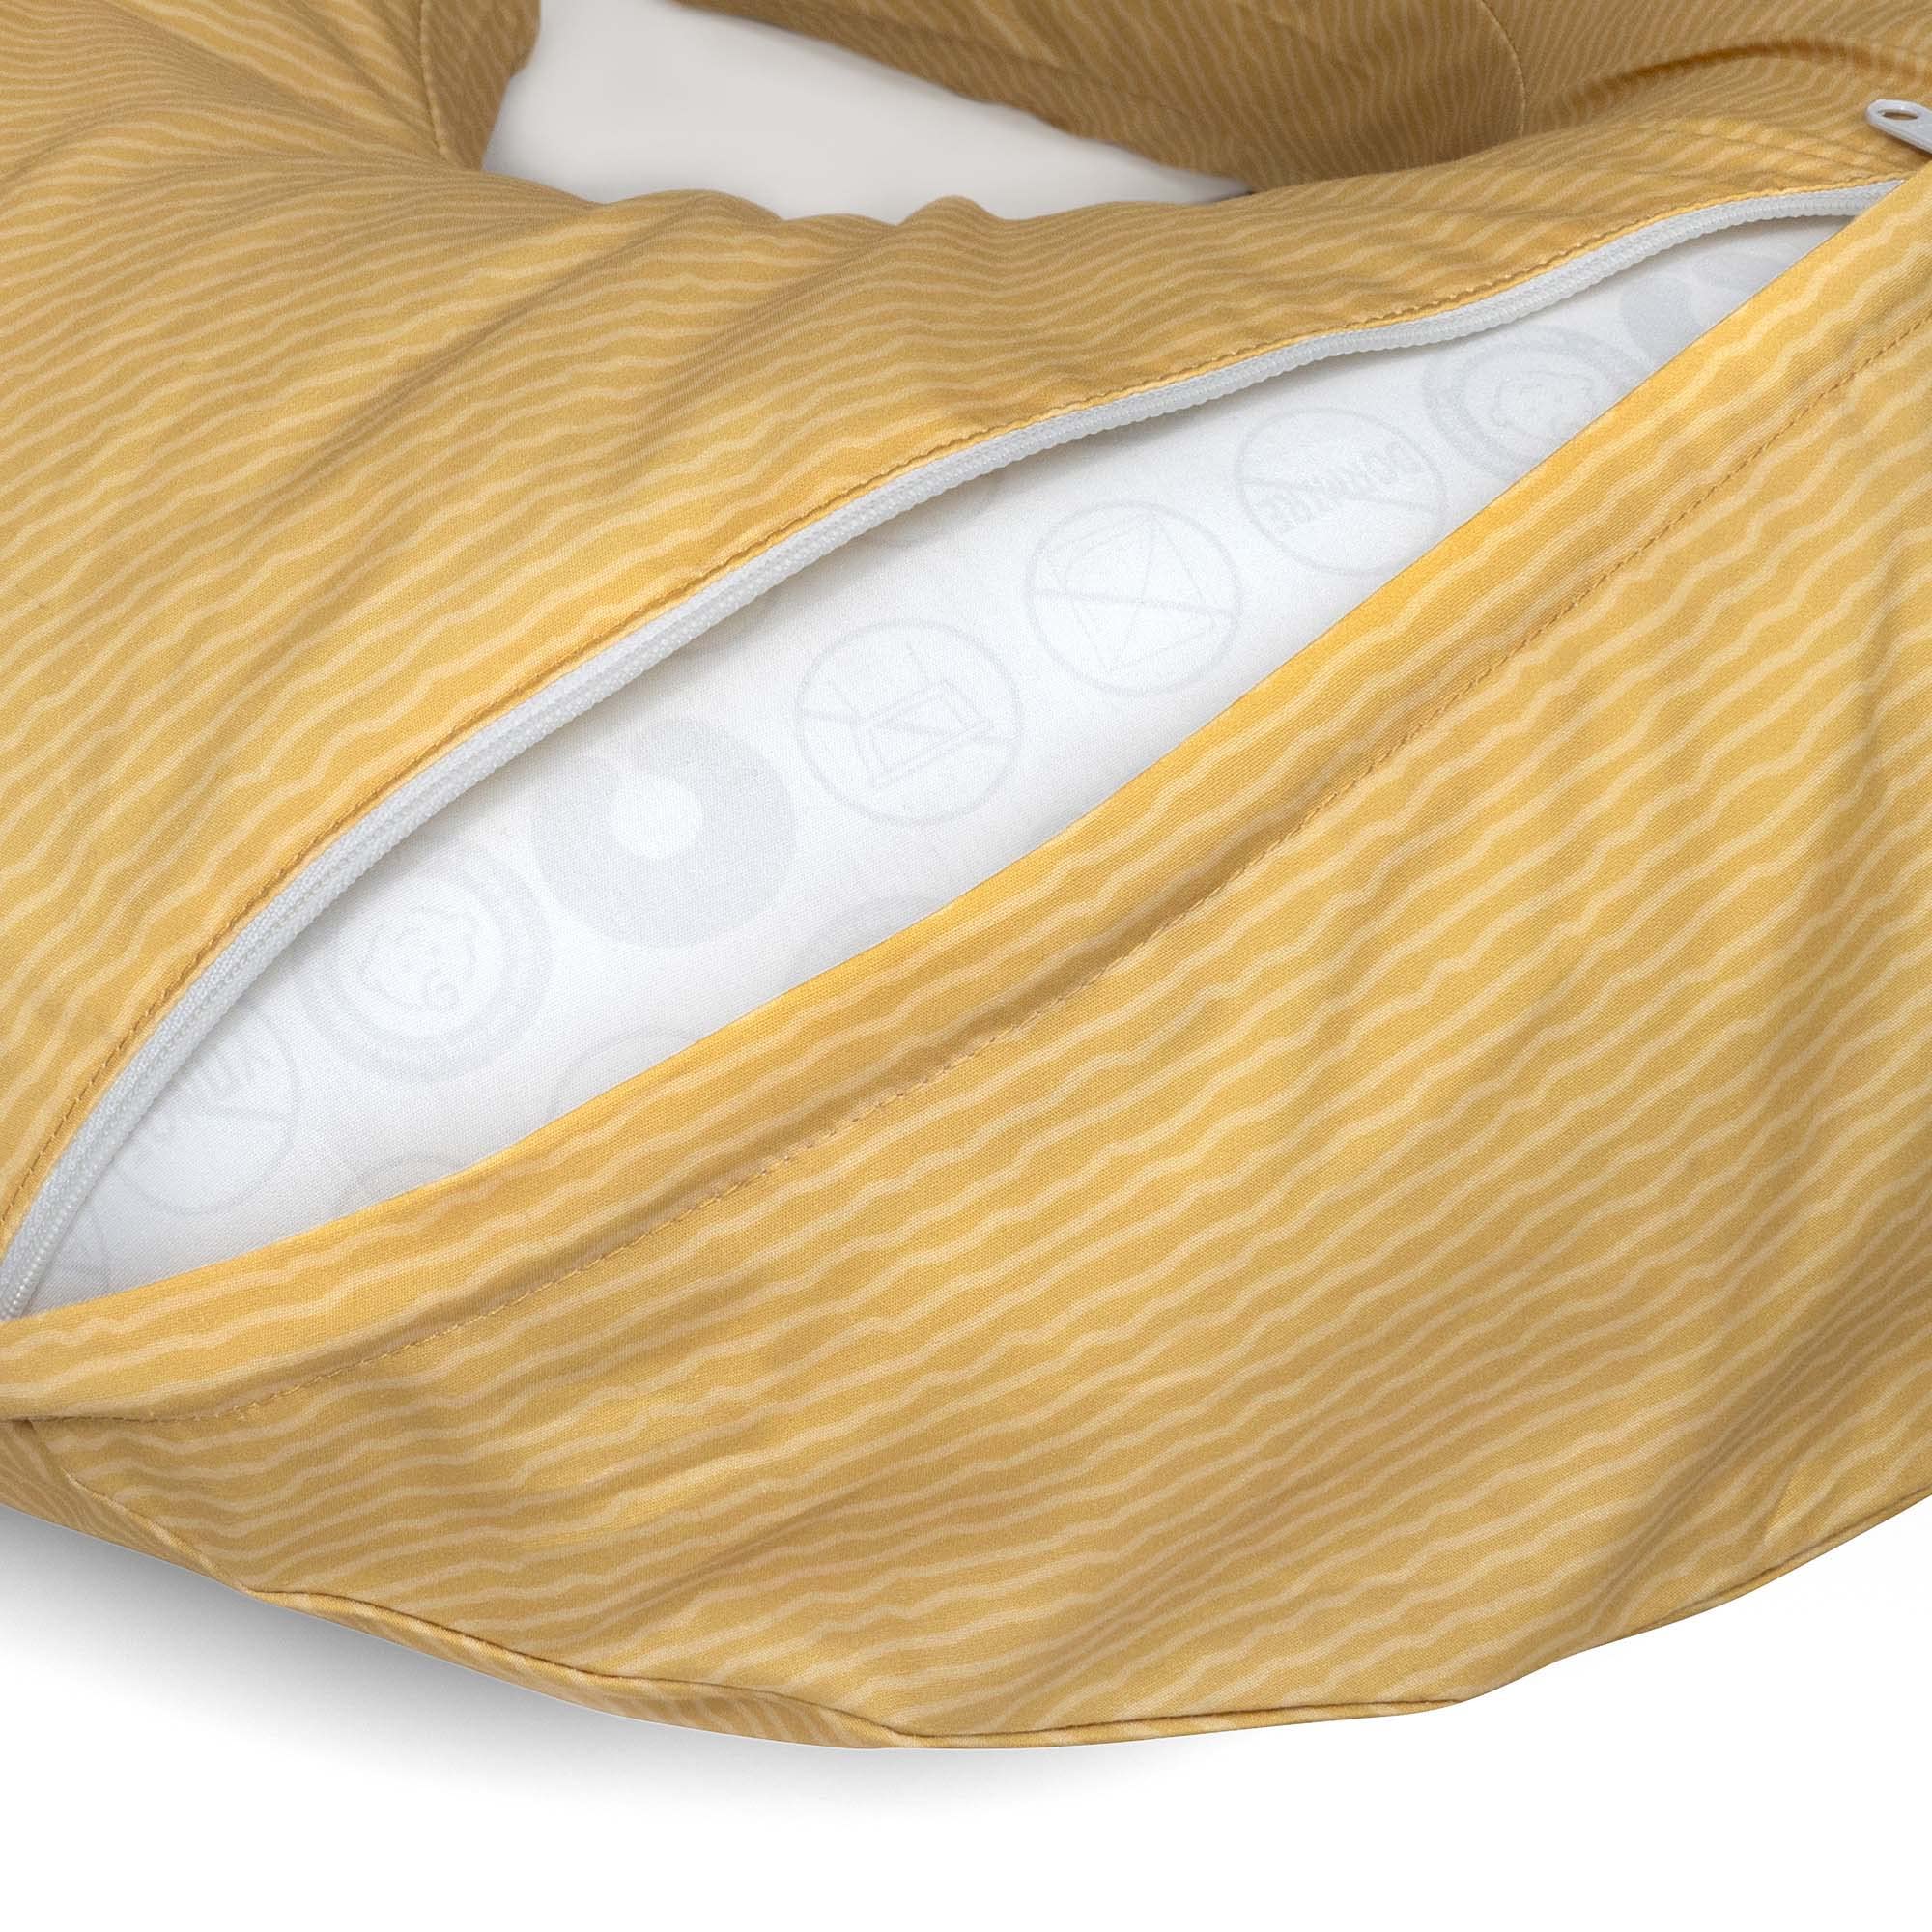 Boppy Original Support Nursing Pillow Cover, Ochre Striated, Cotton Blend Cover Fits All Boppy Original Nursing Supports for Breastfeeding, Bottle Feeding, and Bonding, Cover Only